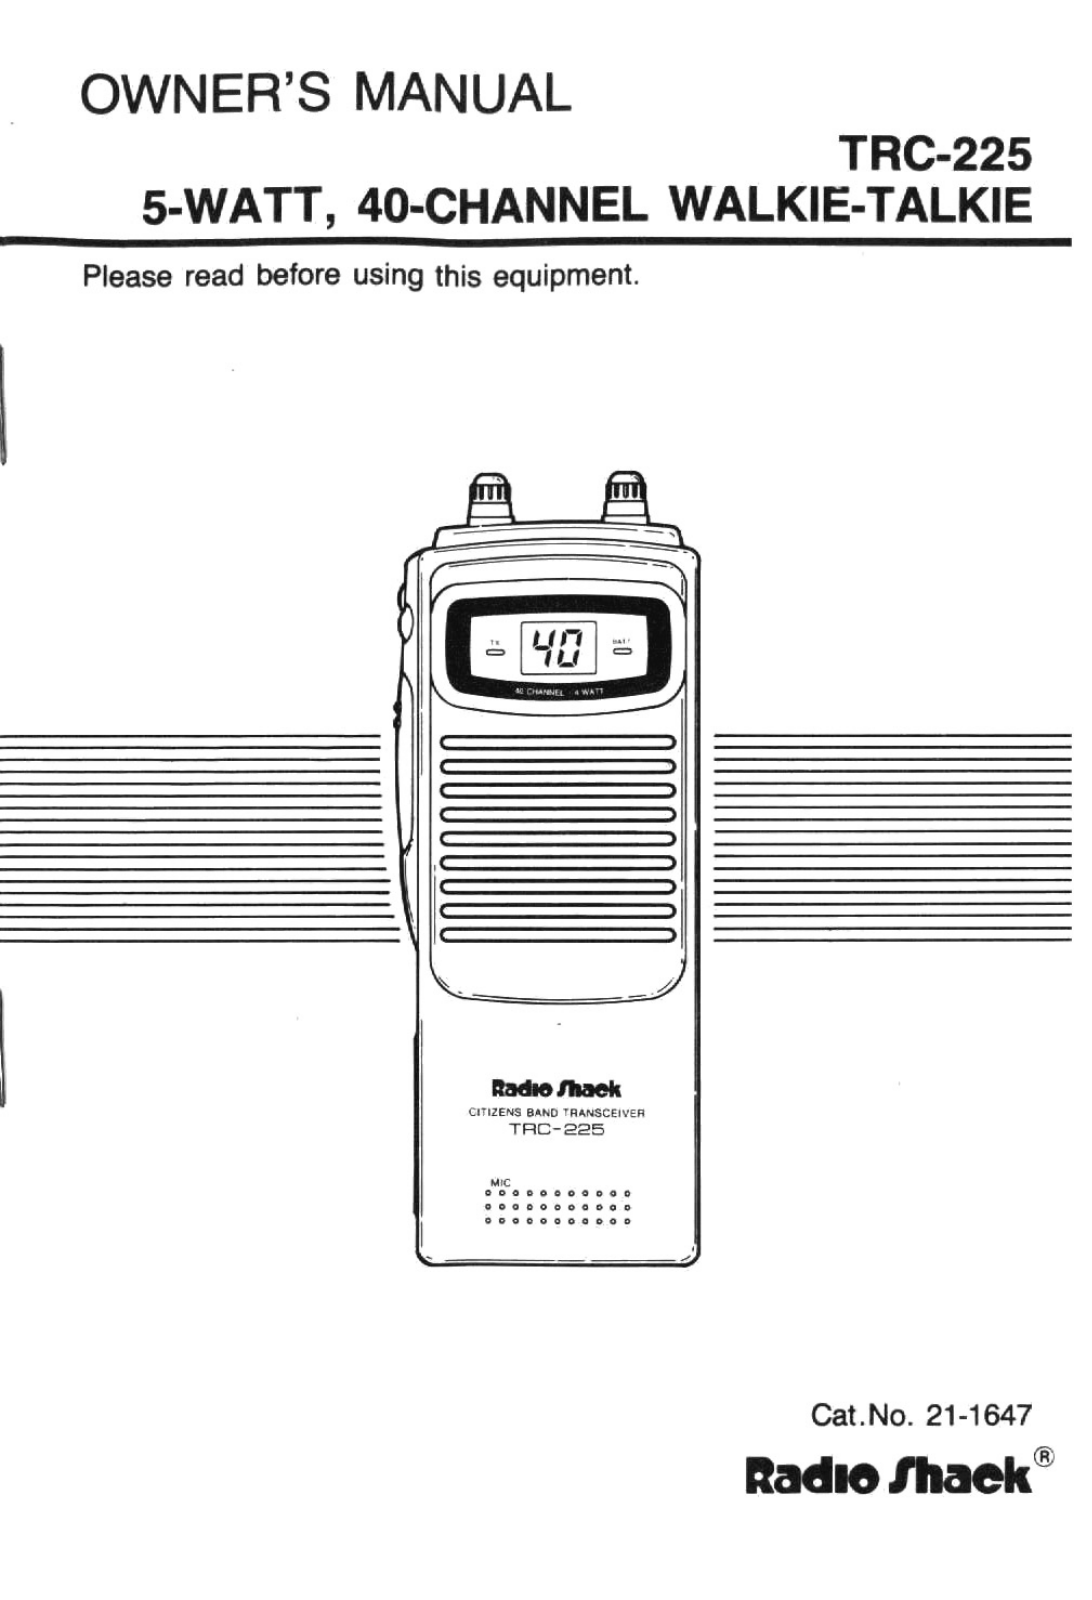 radio shack walkie talkies manual